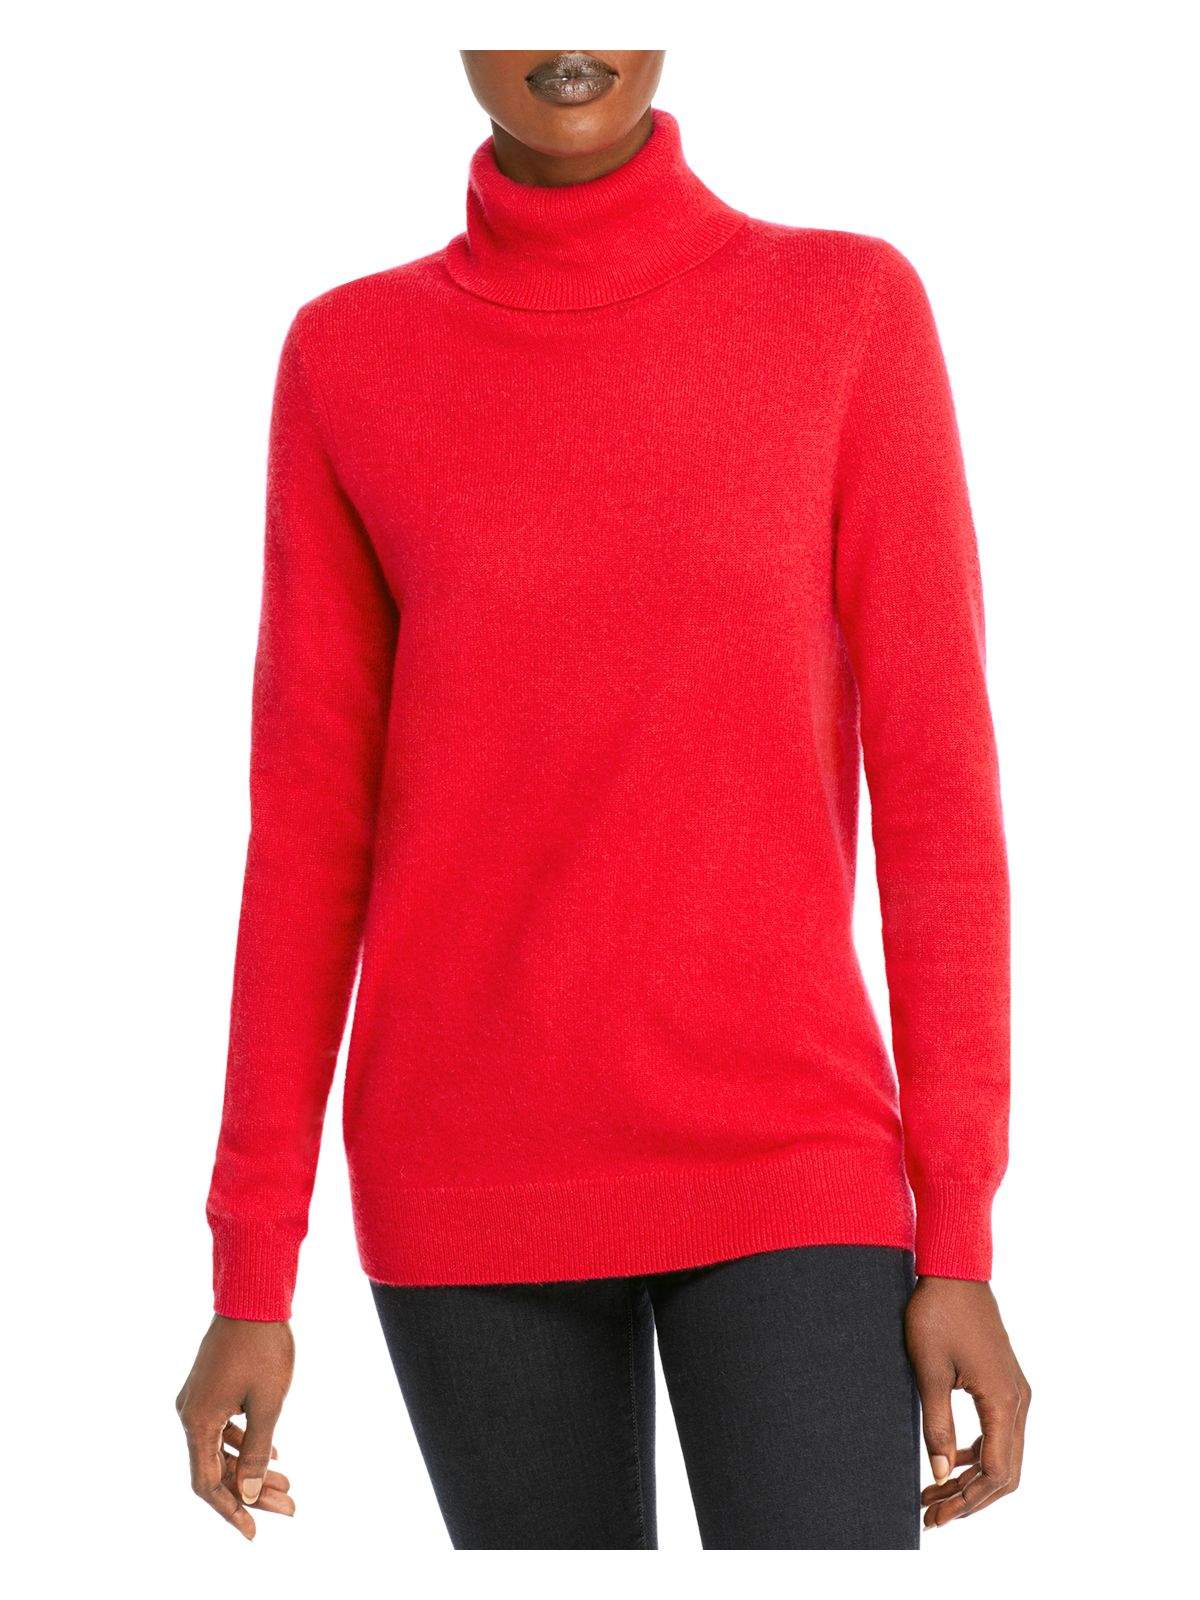 Designer Brand Womens Red Long Sleeve Turtle Neck Blouse S